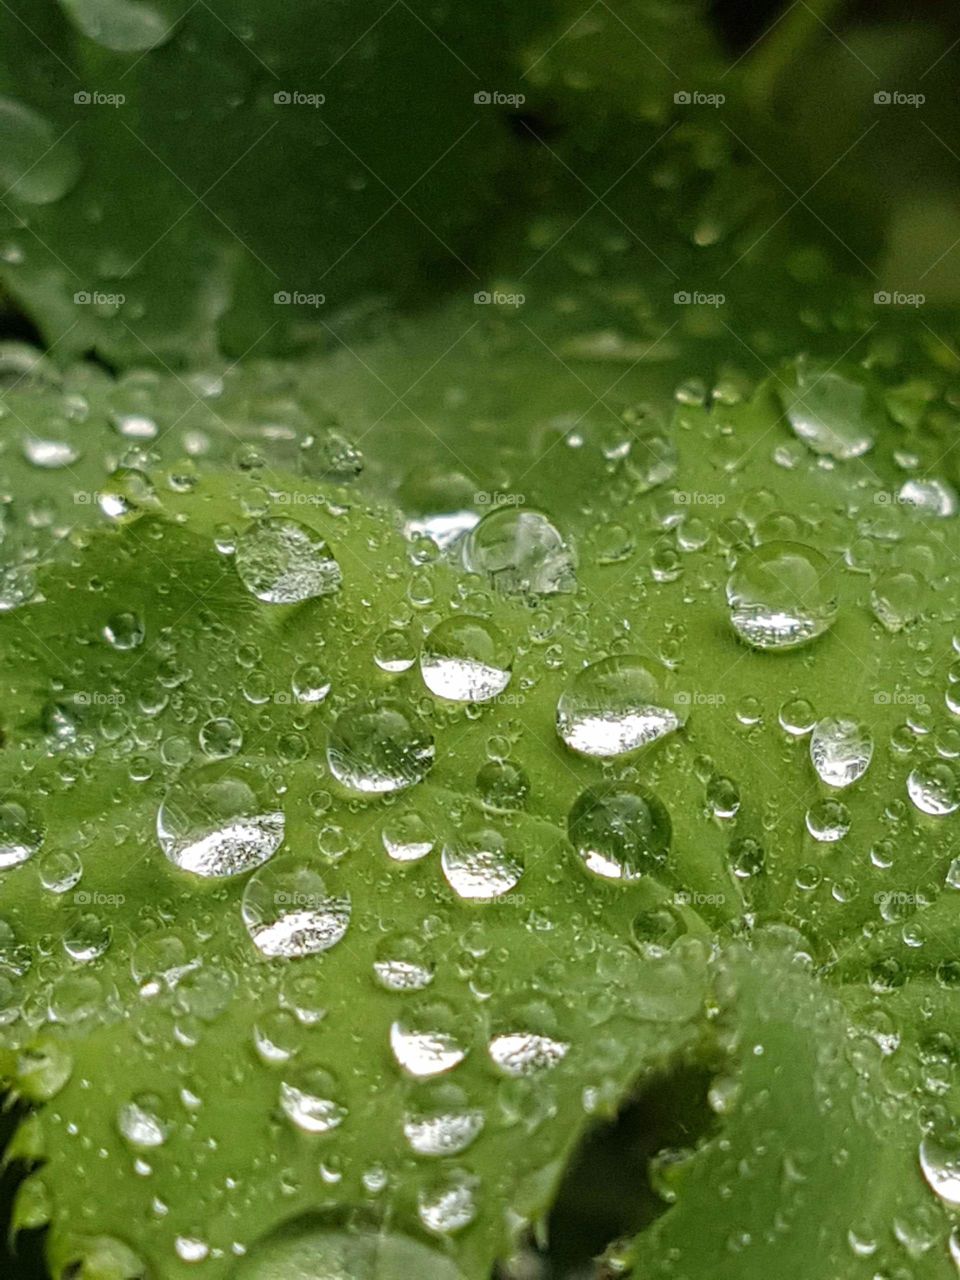 rain droplets